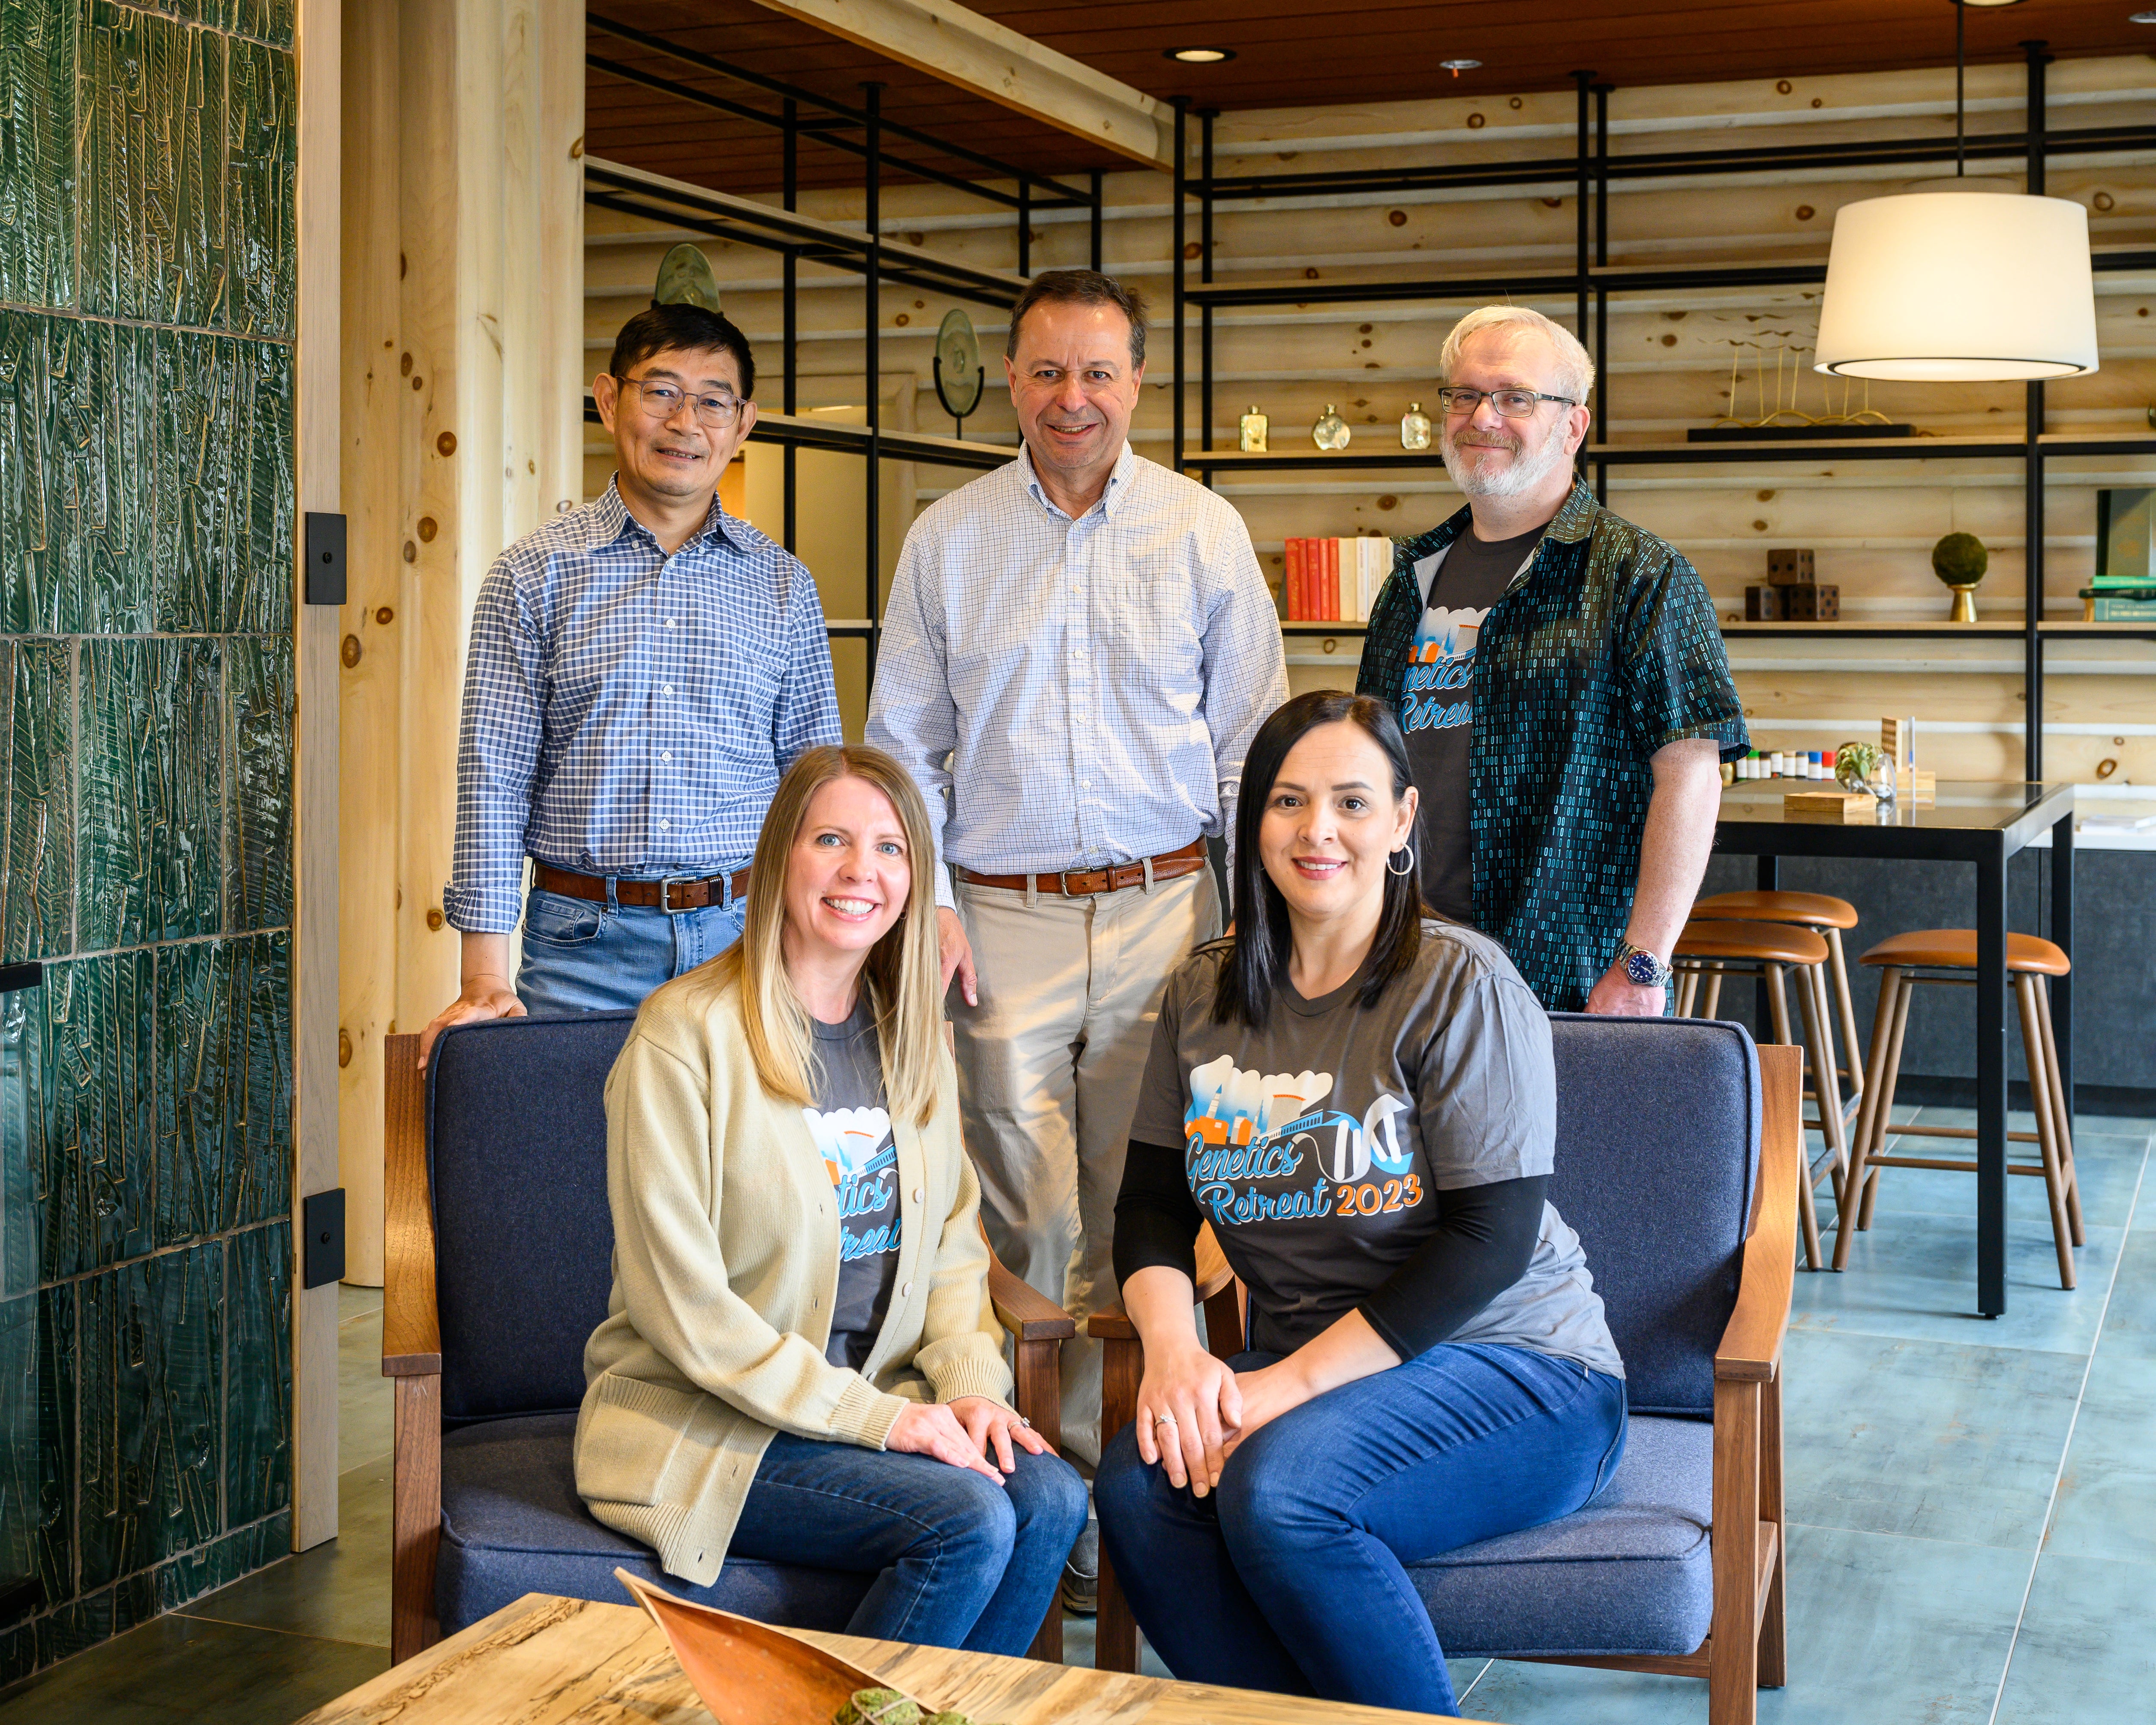 The 5 members of the CWRU Genomics Core staff